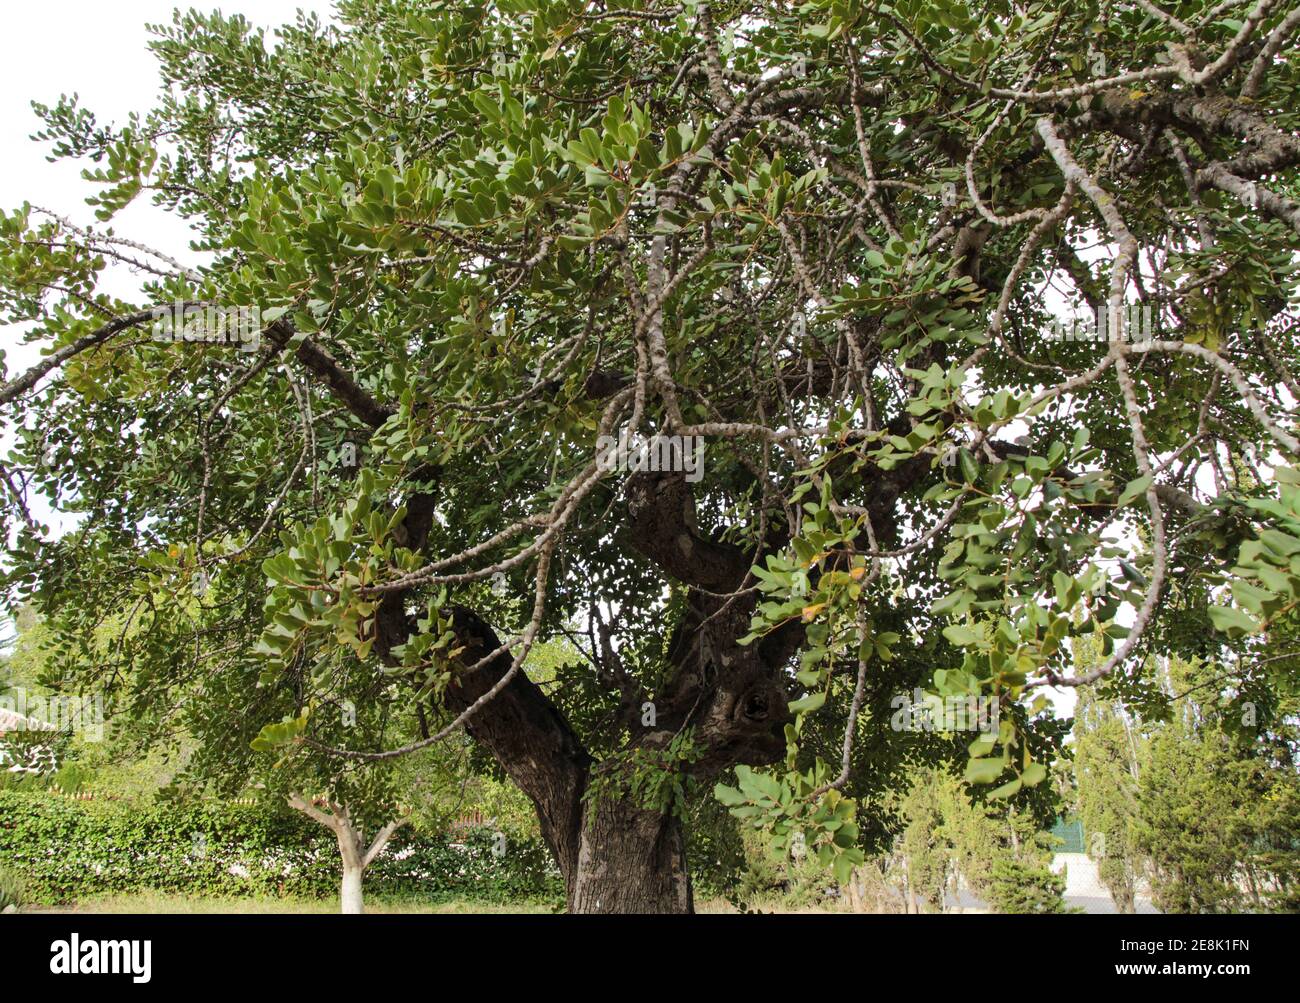 Beautiful Ceratonia Siliqua tree in the garden under the sun in Spain Stock Photo